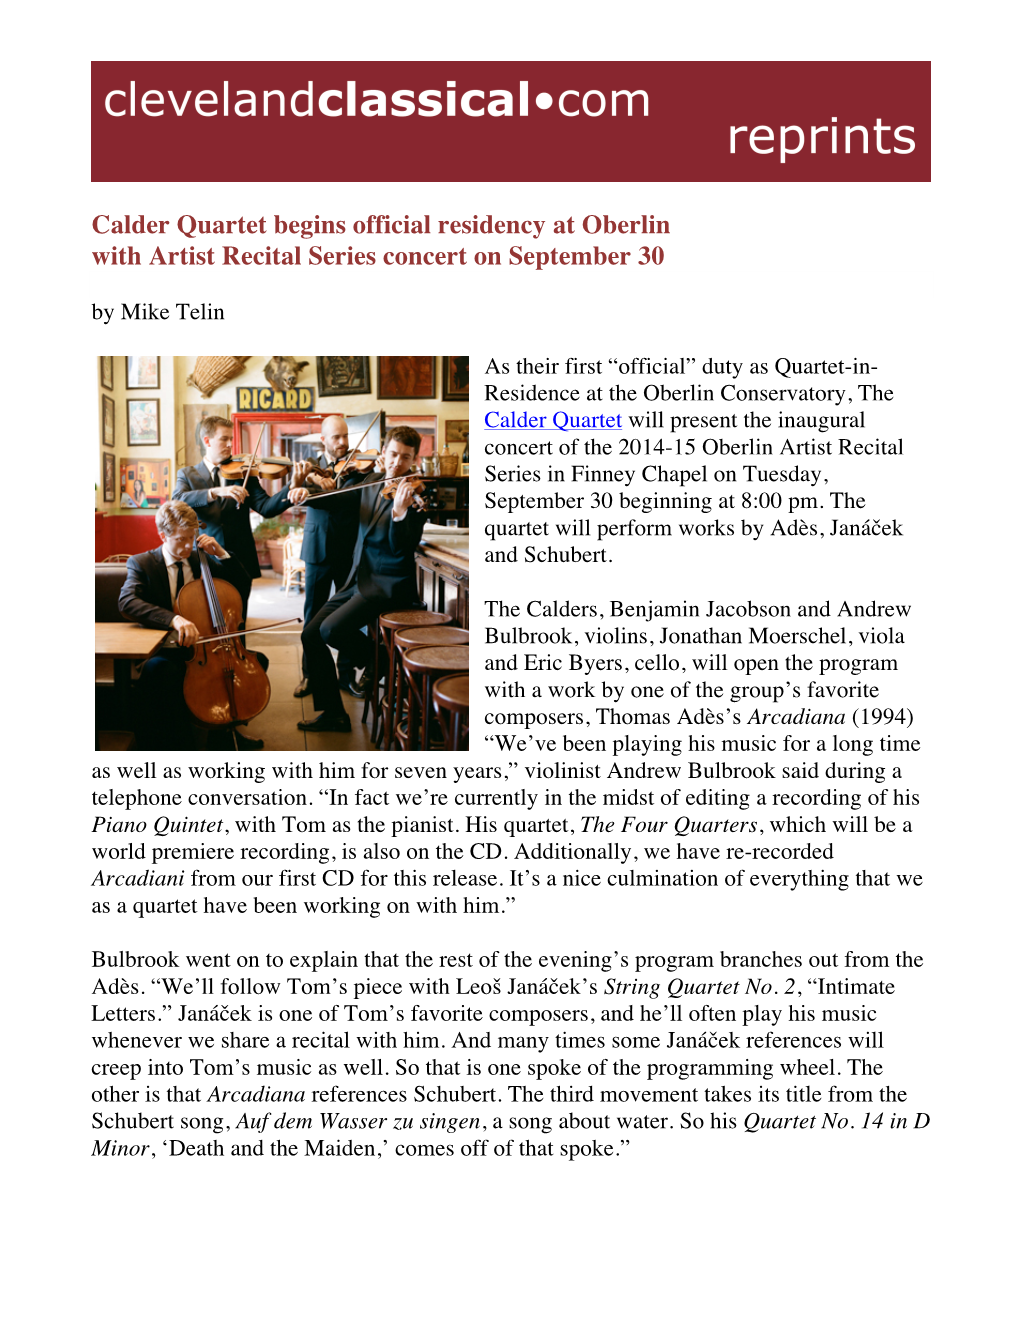 Calder Quartet Begins Official Residency at Oberlin with Artist Recital Series Concert on September 30 by Mike Telin